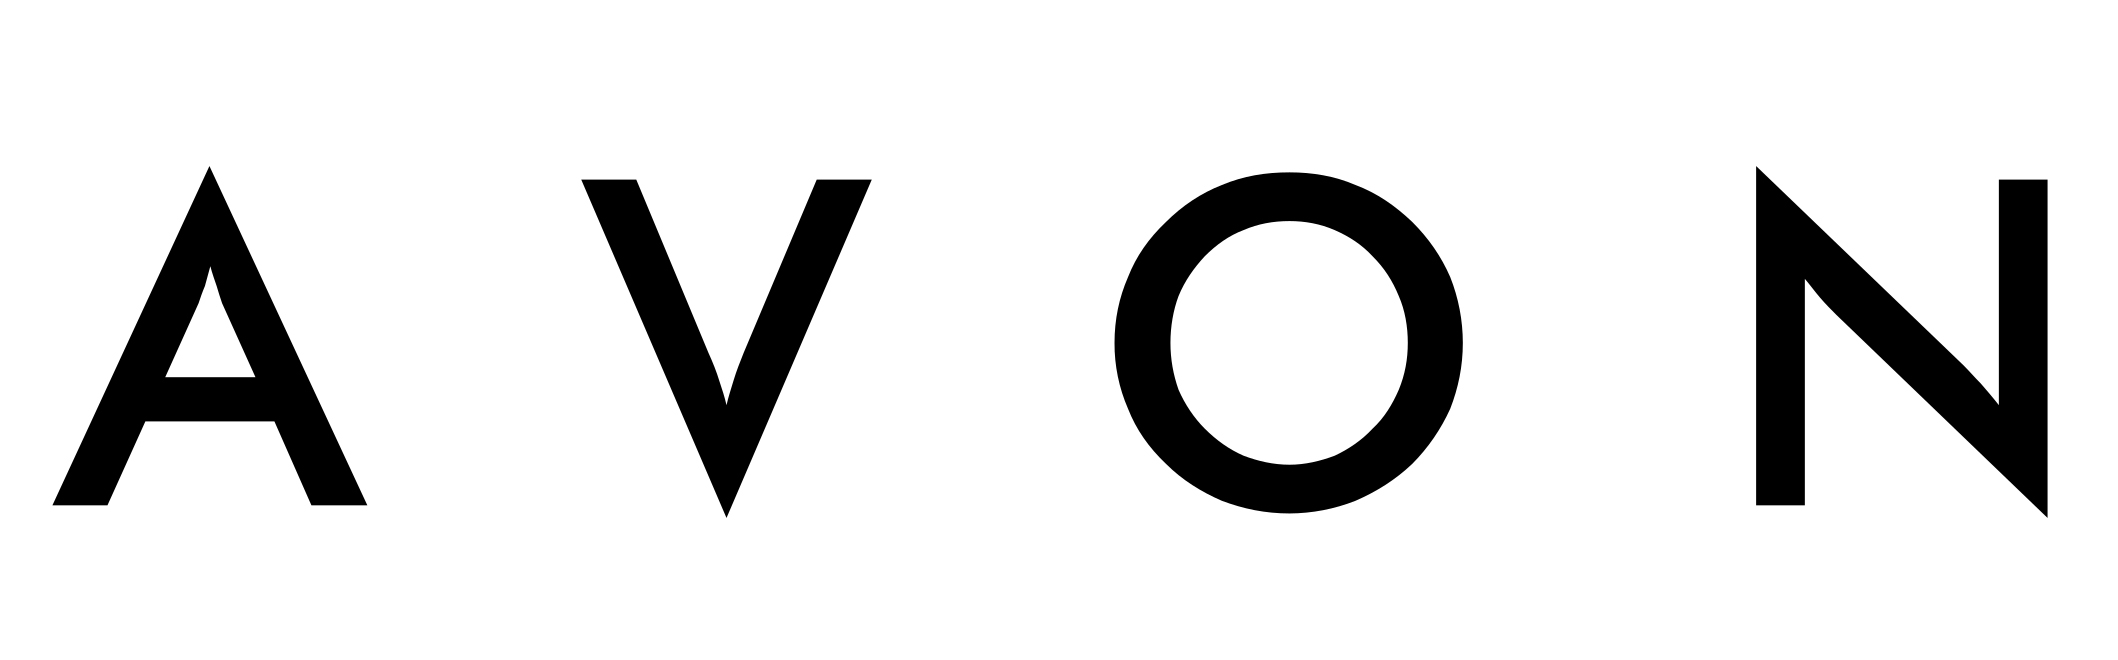 avon-5-logo-png-transparent.jpg